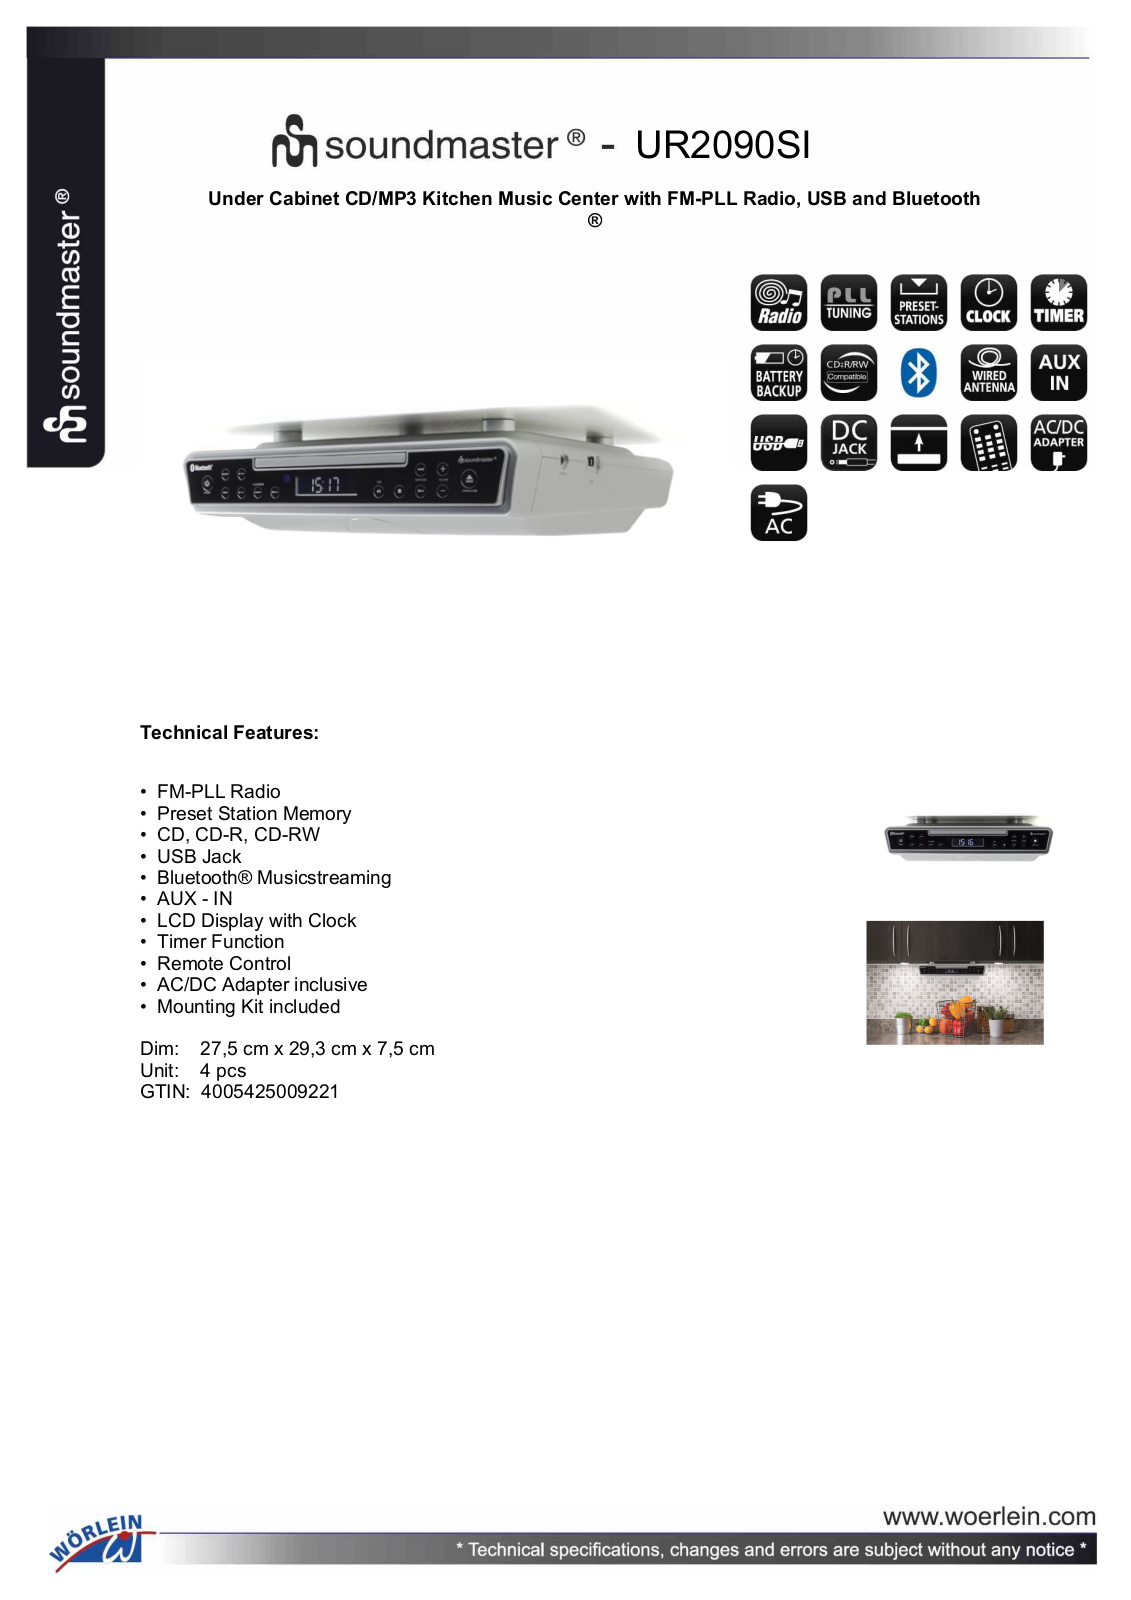 Soundmaster UR2090SI User Manual